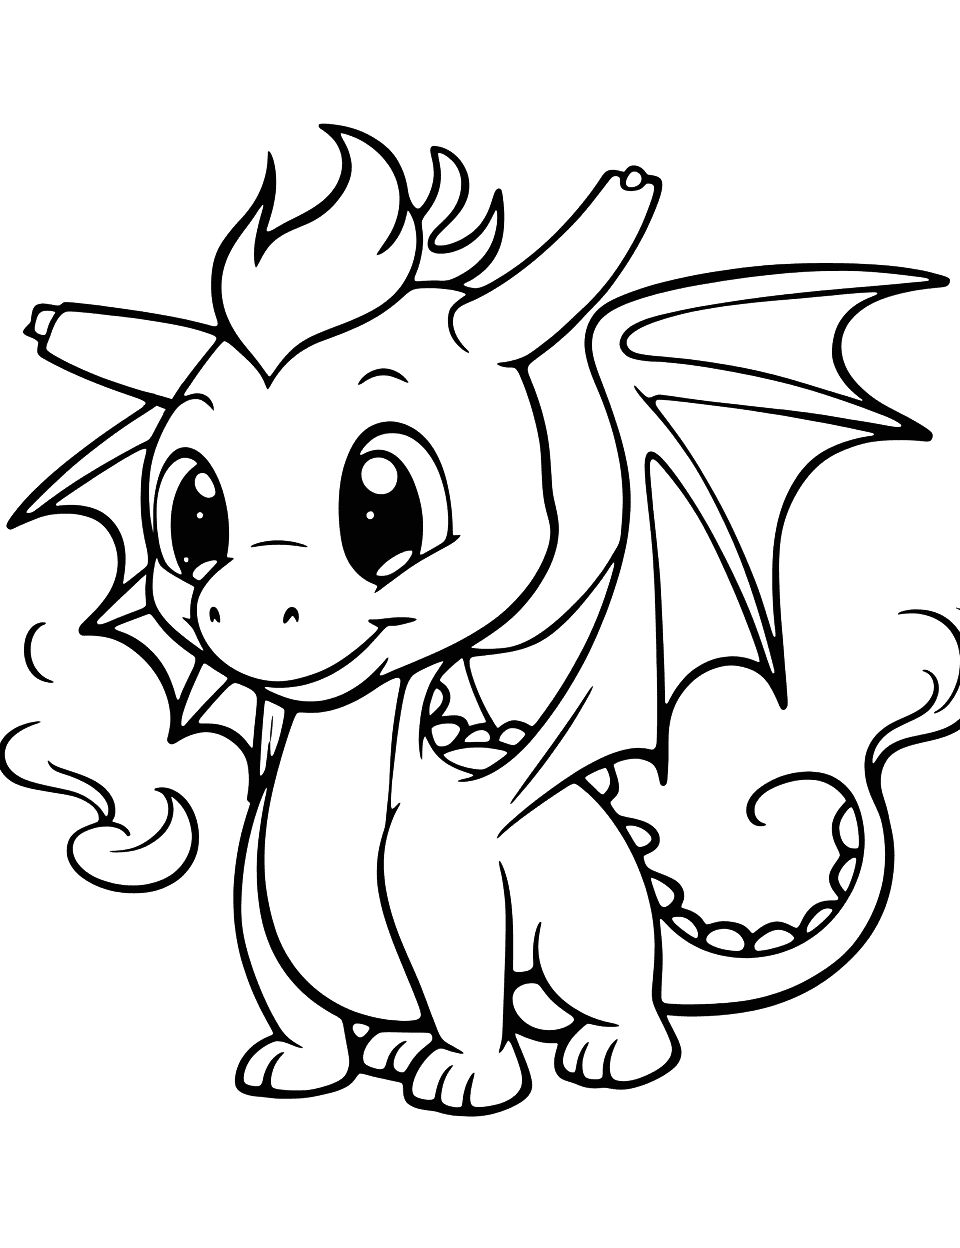 Chibi Dragon Coloring Page - A cute chibi-style dragon blowing a puff of smoke.